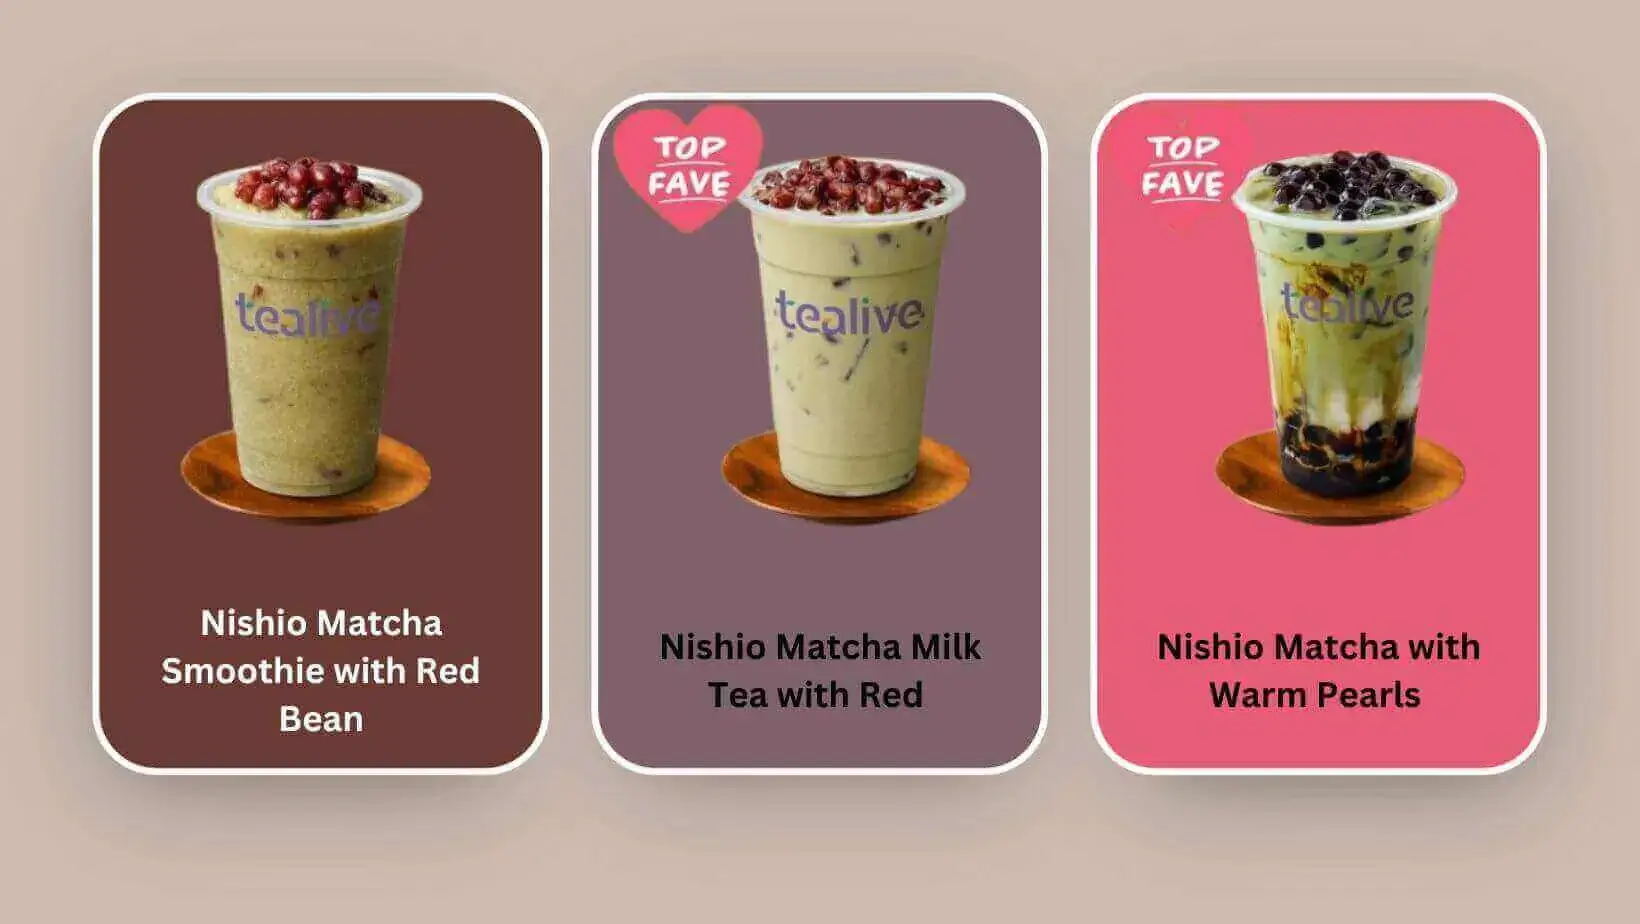 Nishio Matcha Smoothie with Red Bean, Nishio Matcha Milk Tea with Red Bean, Nishio Matcha with Warm Pearls at Tealive menu malaysia